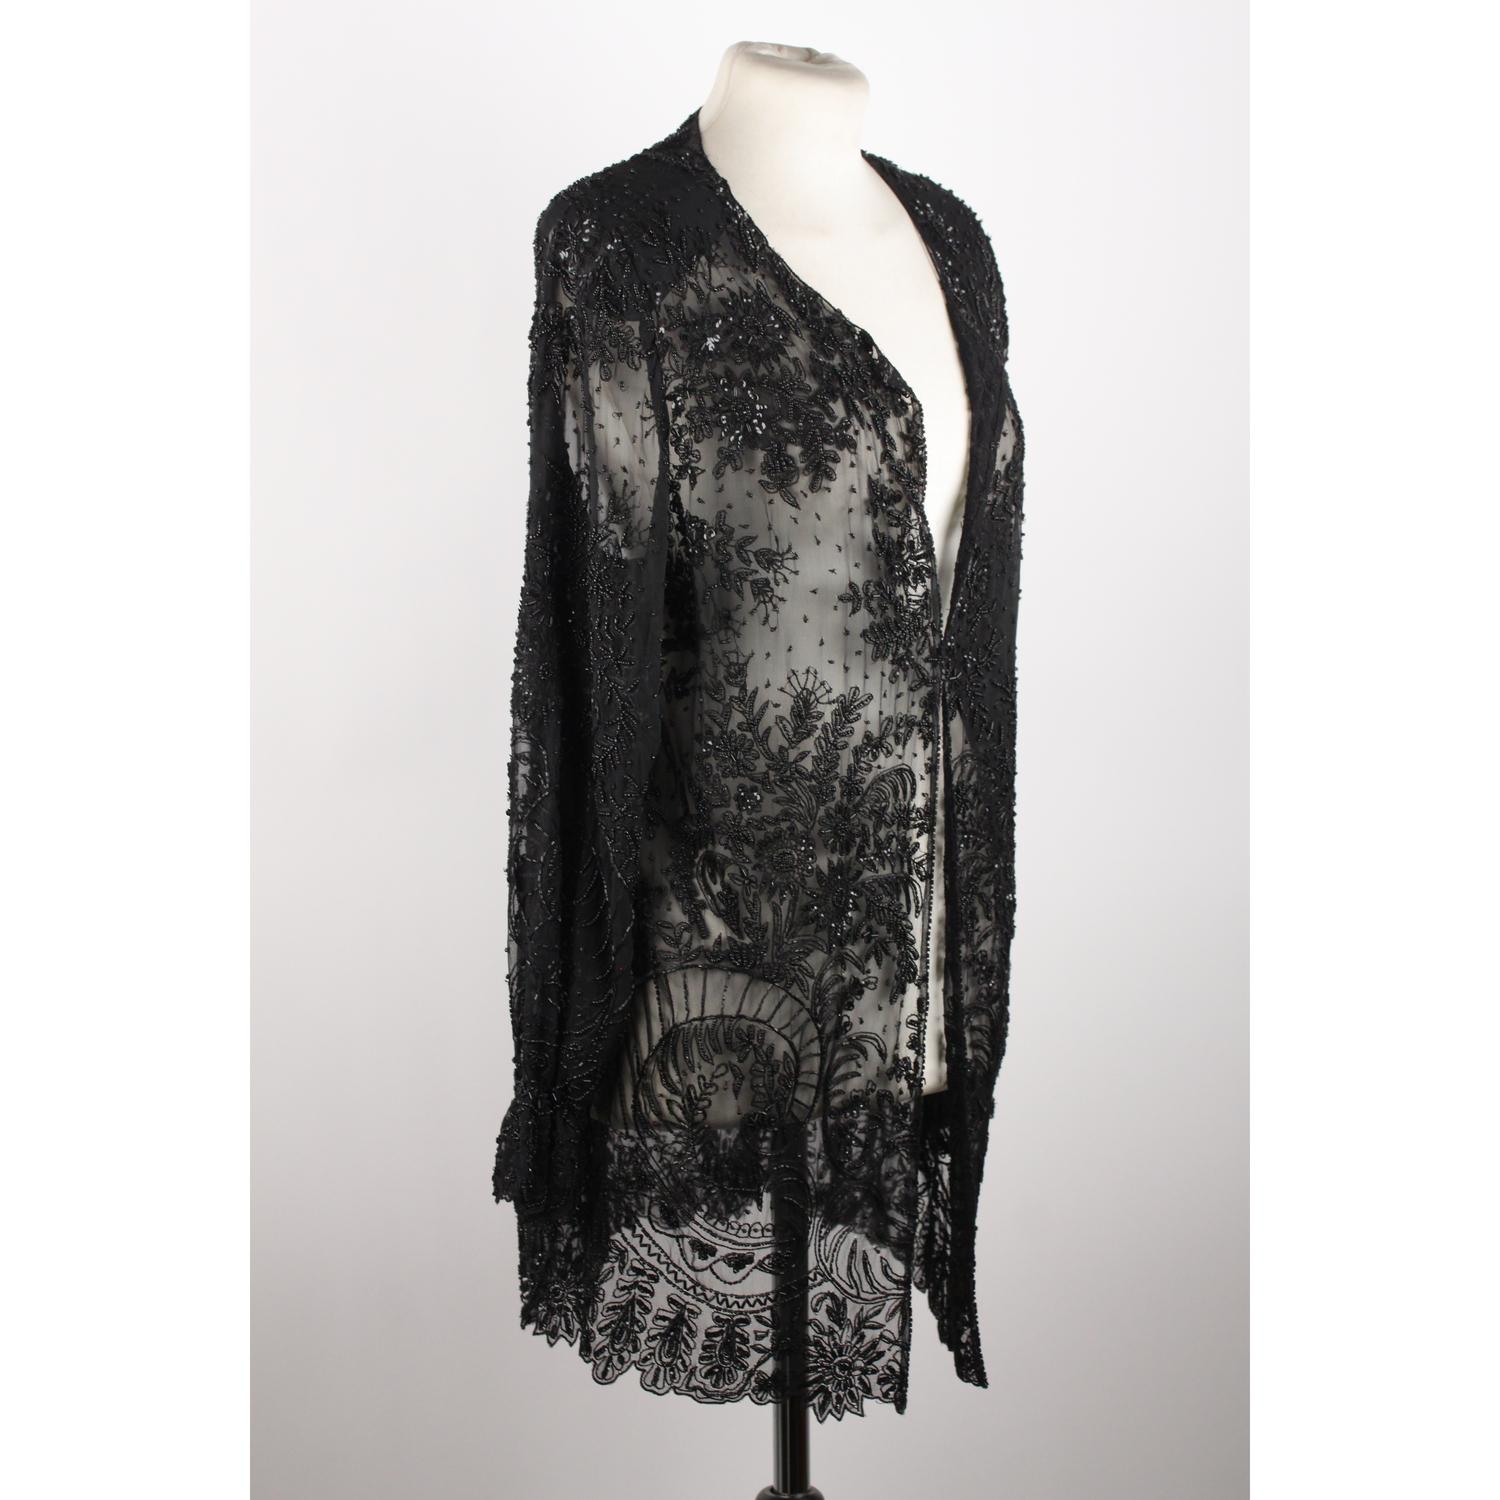 Women's Frank Usher Vintage Black Embellished Beaded Sheer Shirt Blouse Size S